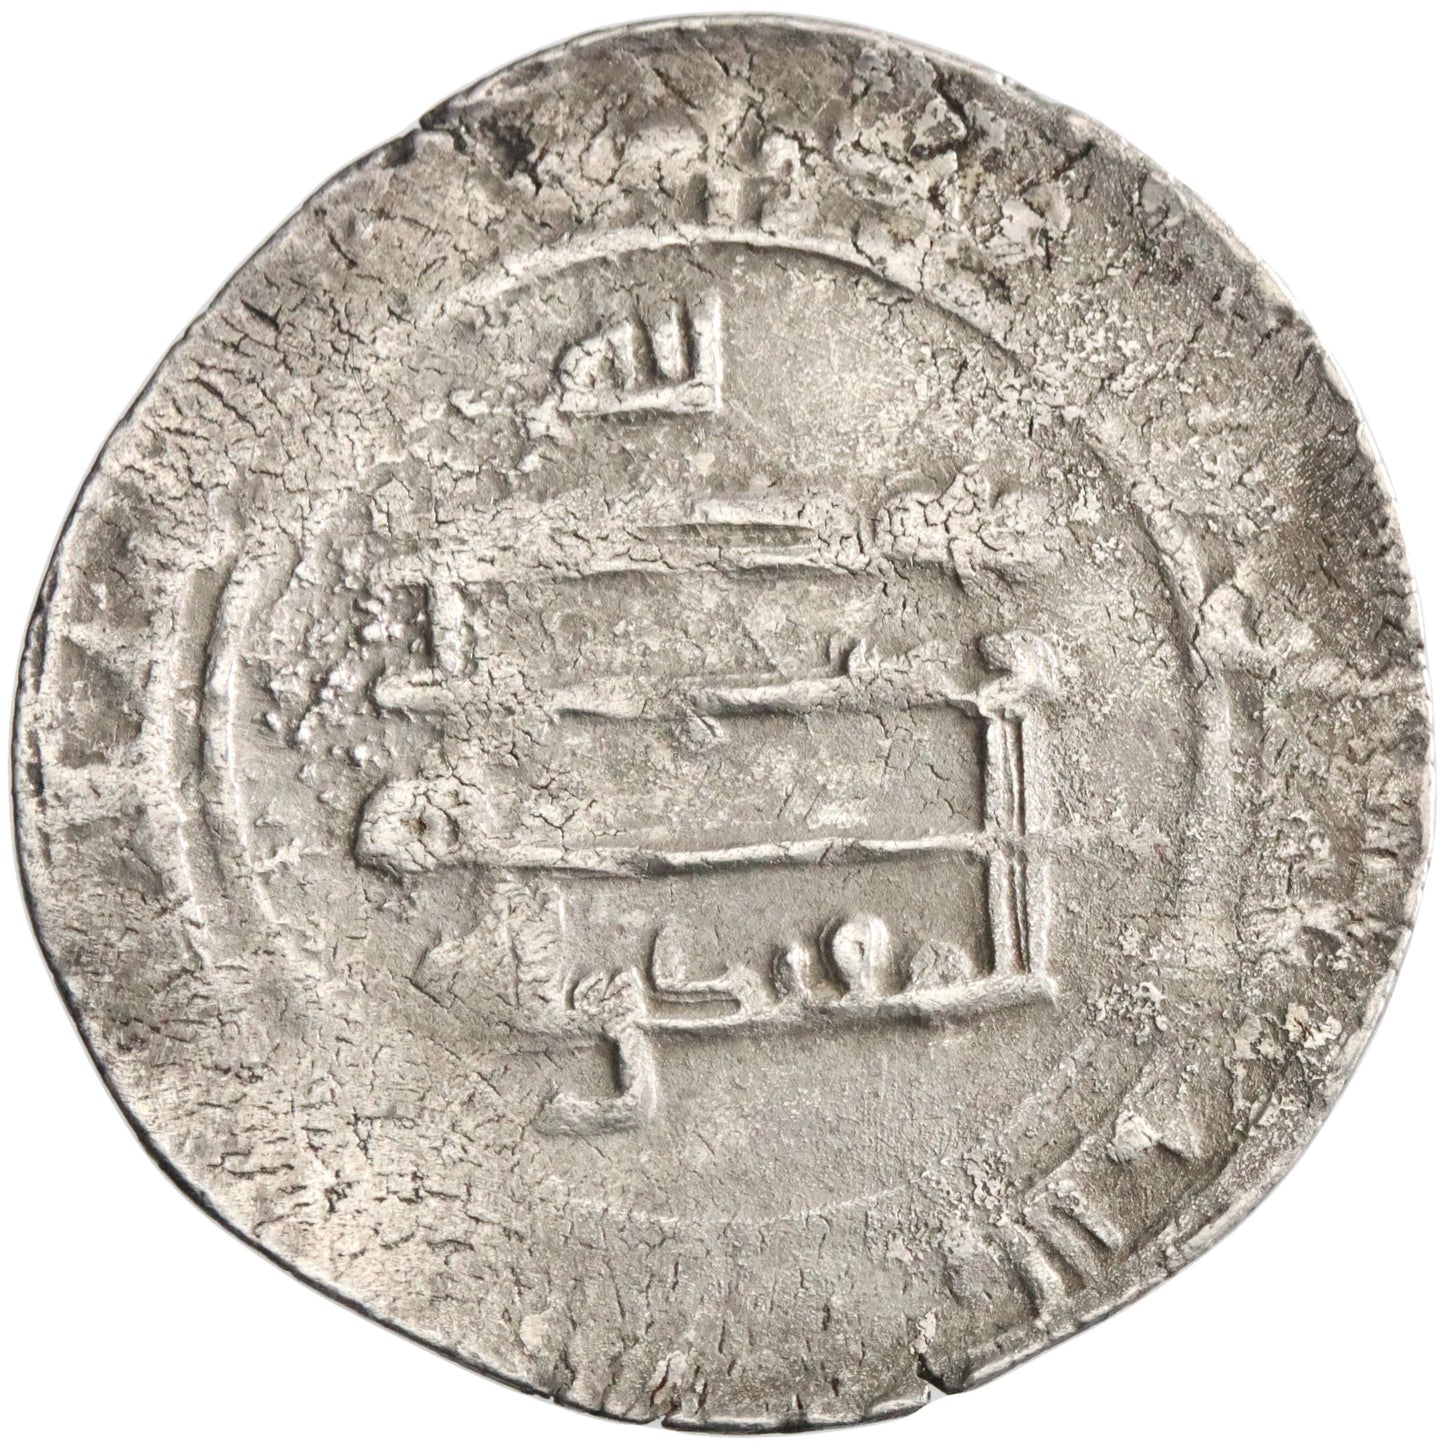 Abbasid, al-Muqtadir, silver dirham, Tarsus (Tarsos) mint, AH 314, citing Abu al-'Abbas